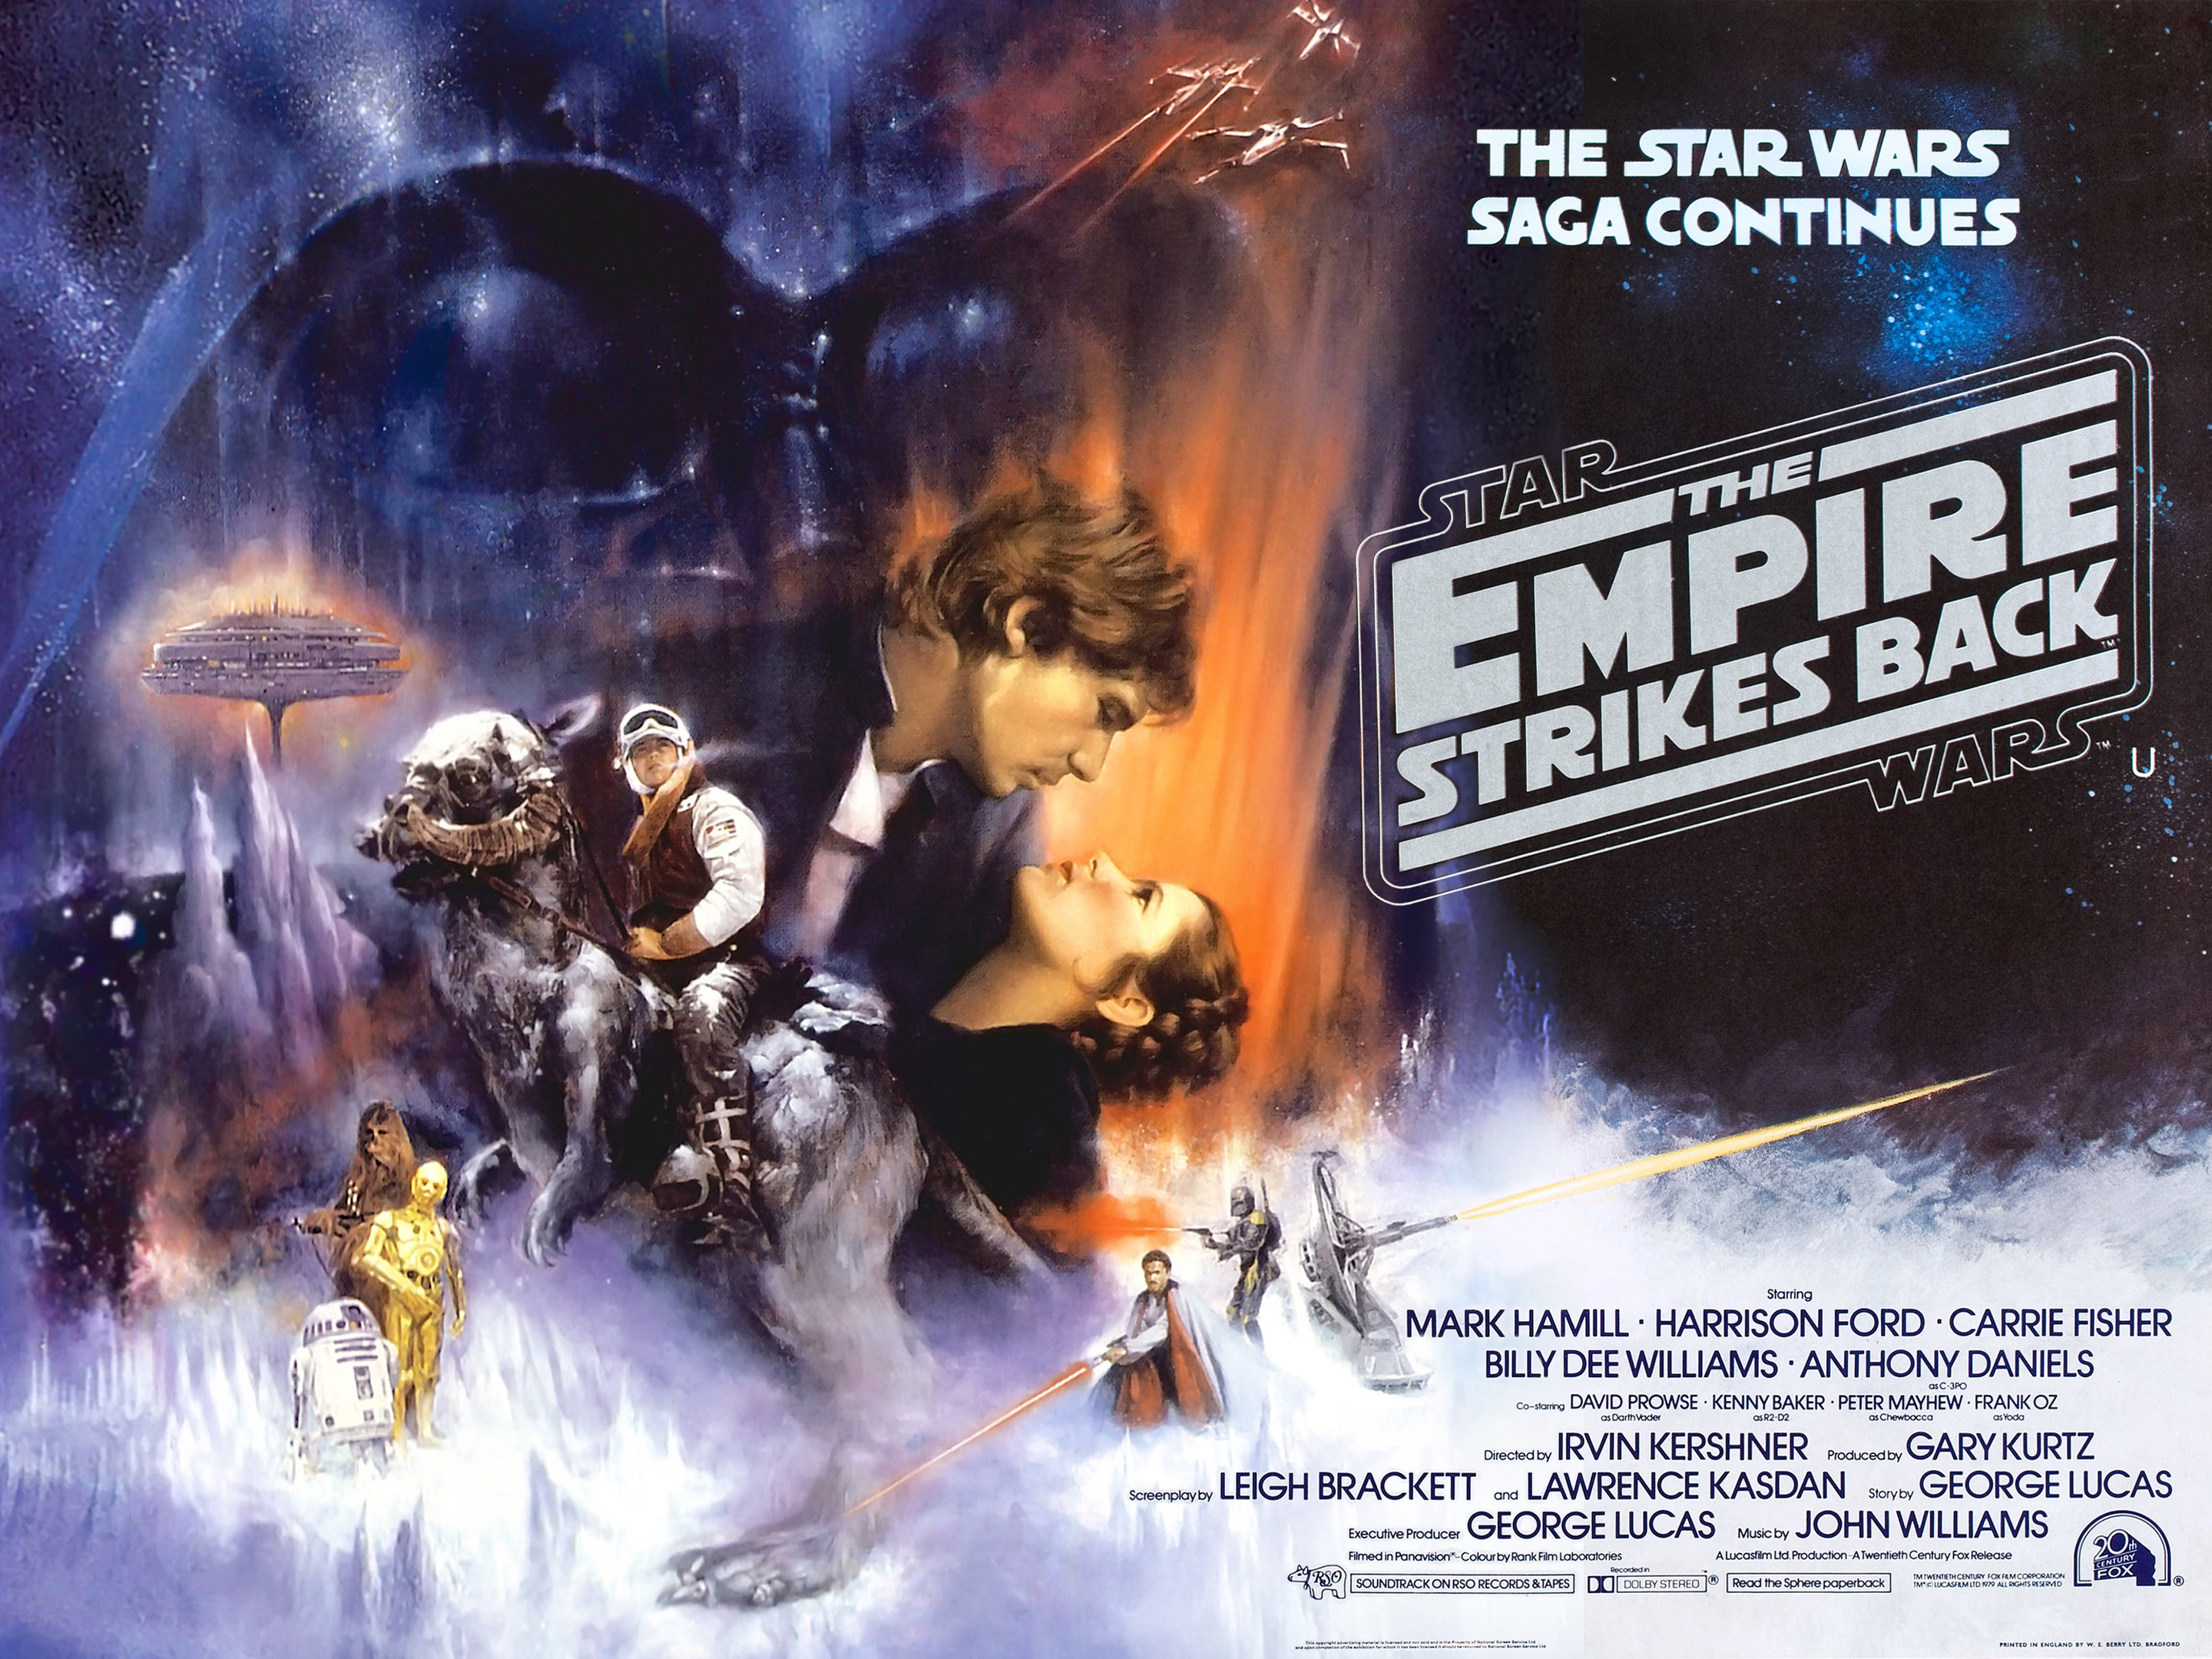 Star Wars Episode V: The Empire Strikes Back #18